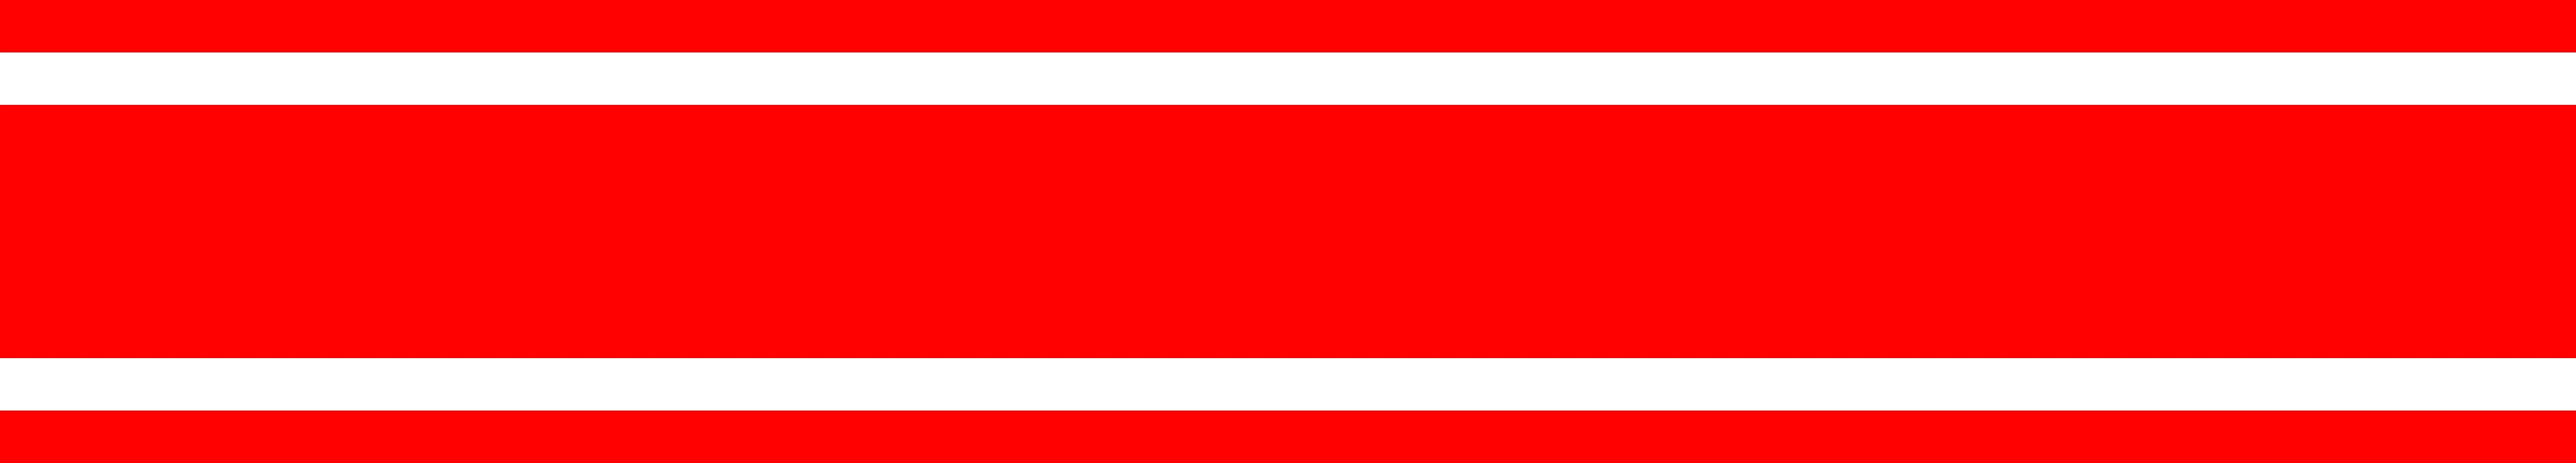 Tripple Stripe   Horizontal   Red